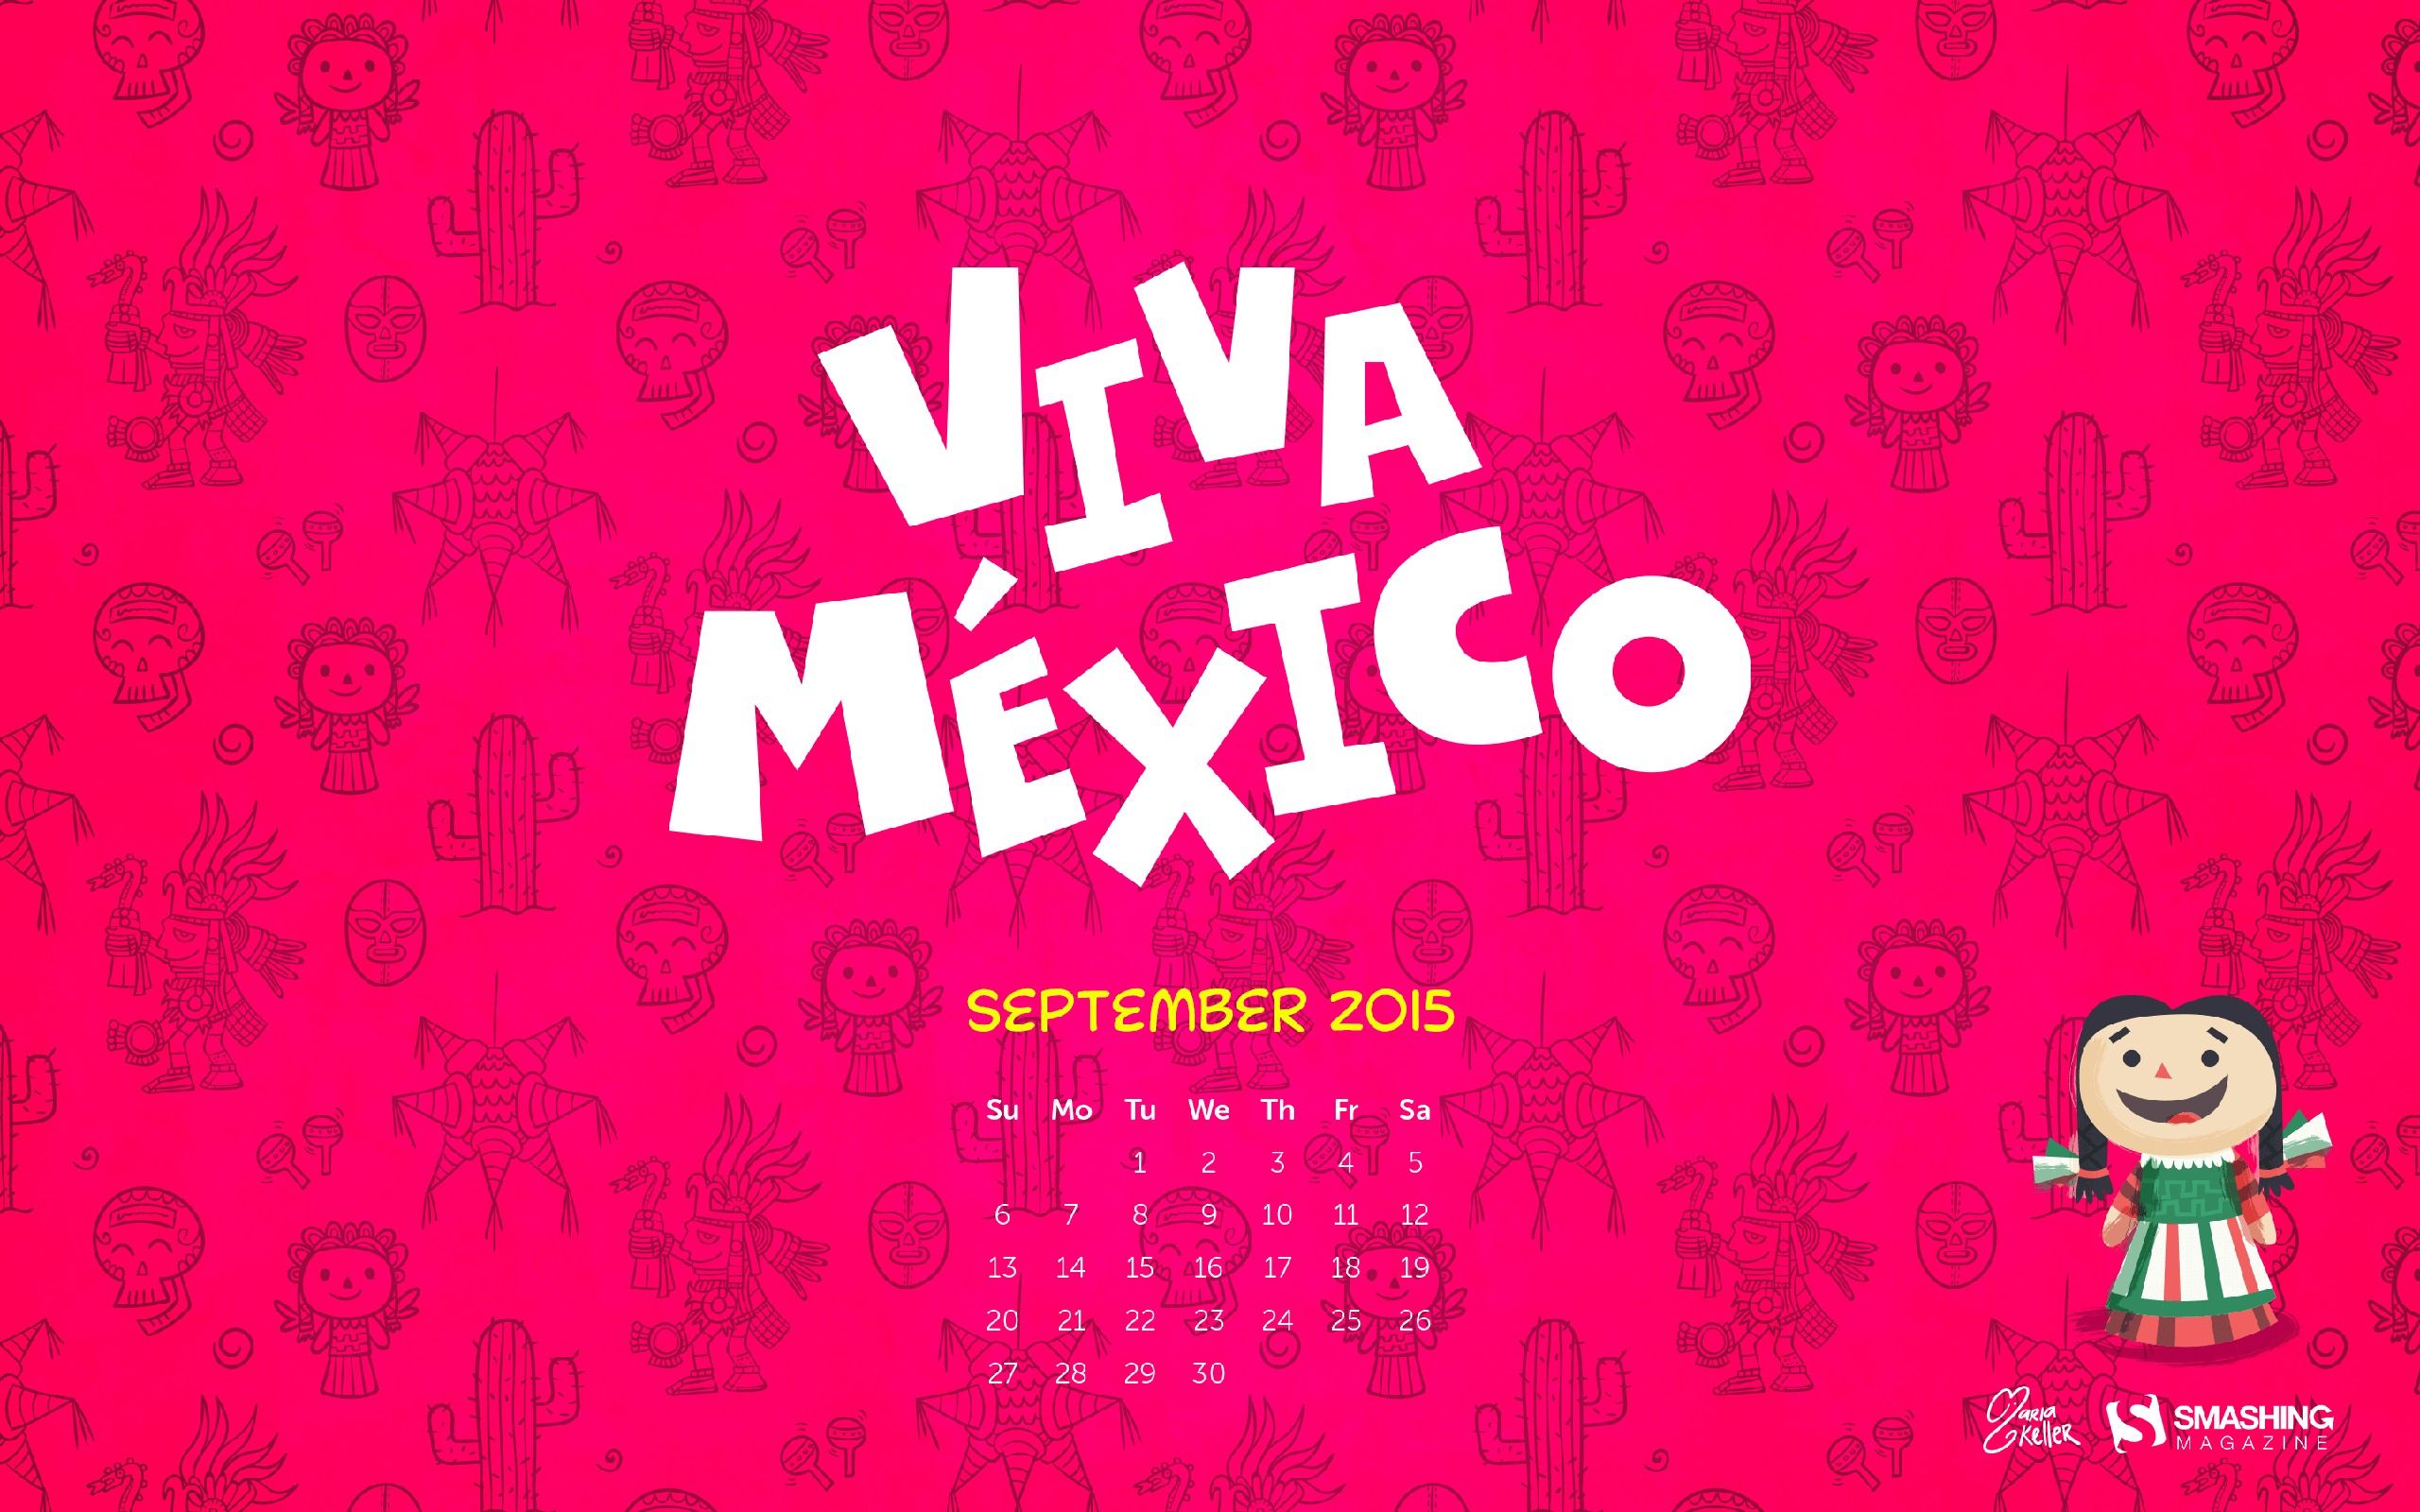 Viva Mexico September 2015 Calendar Wallpaper